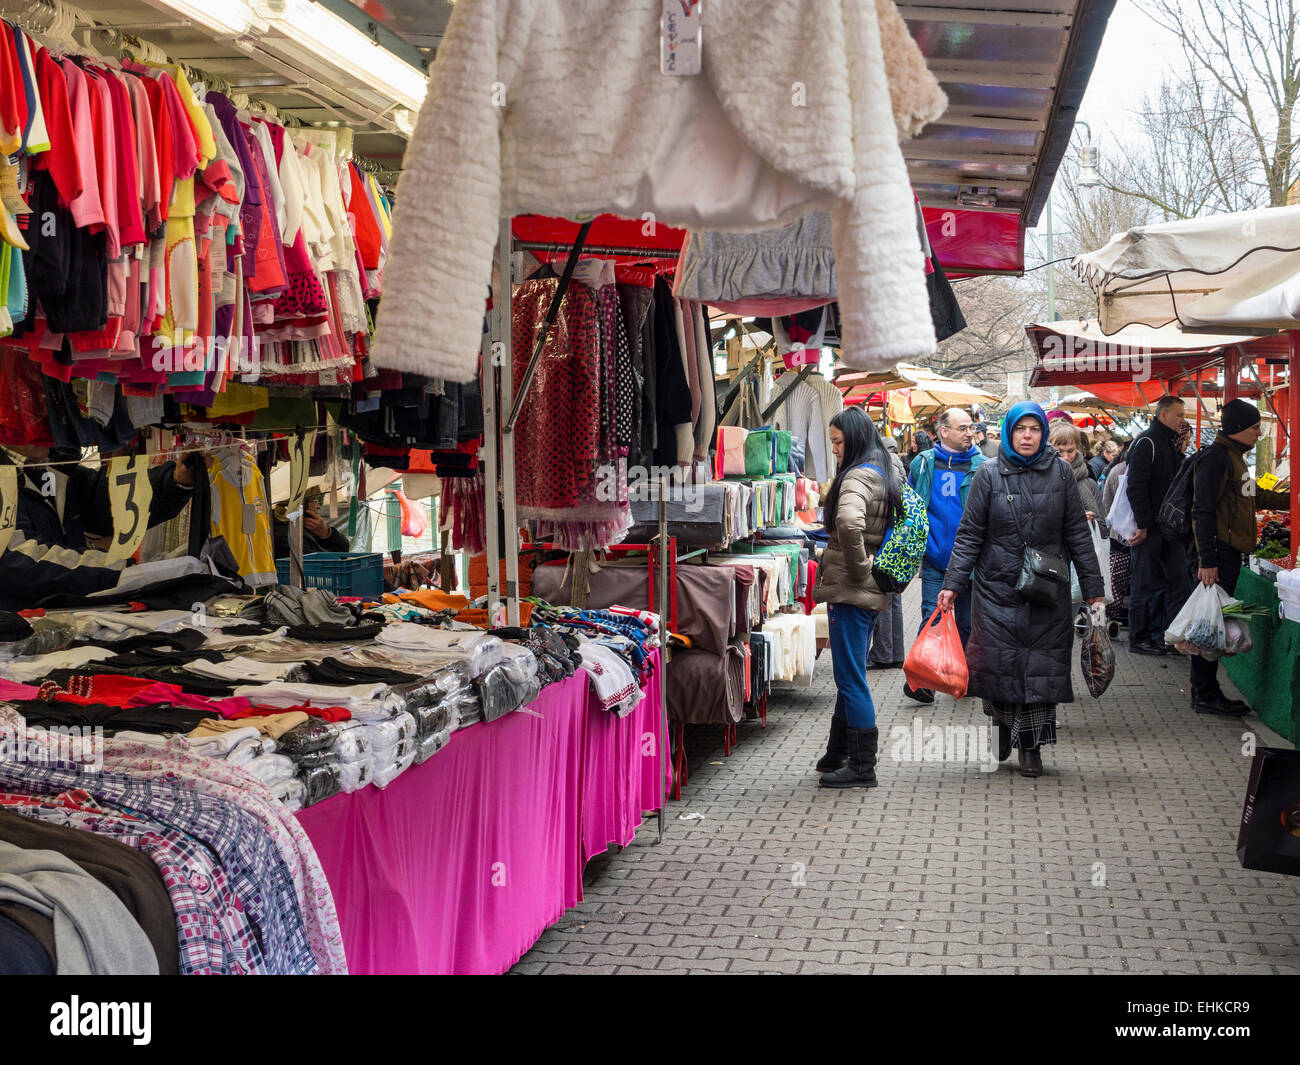 Mercato turco bancarelle che vendono vestiti e people shopping, Türkenmarkt, Türkischer Markt, Maybachufer, Berlino Foto Stock